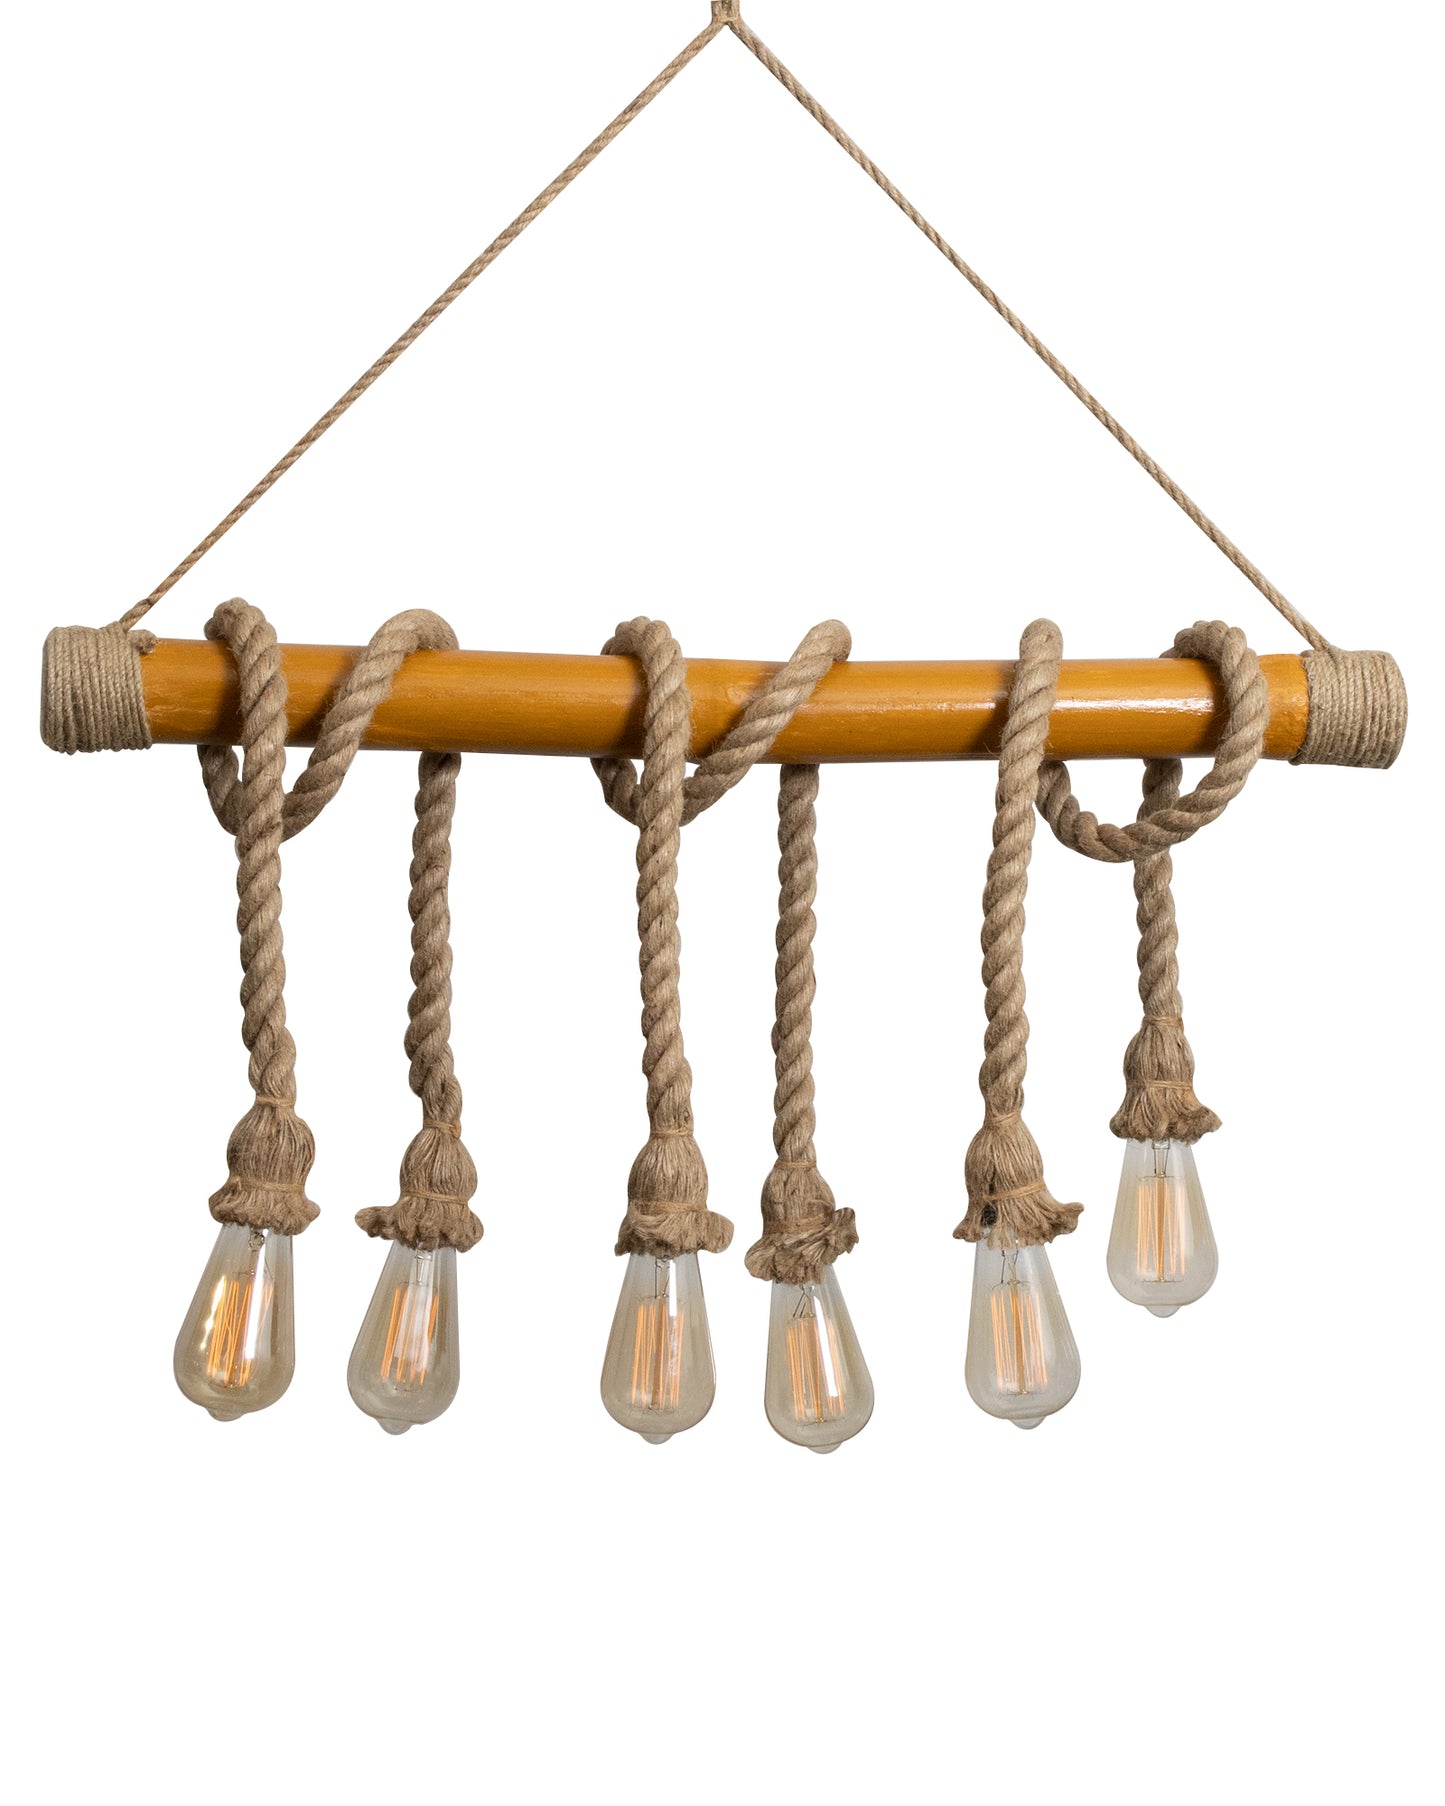 Handmade Hemp Rope Pendant Décor Light 6 Lights Rustic Chandelier Light Fixture Vintage, Rope Braided Bamboo